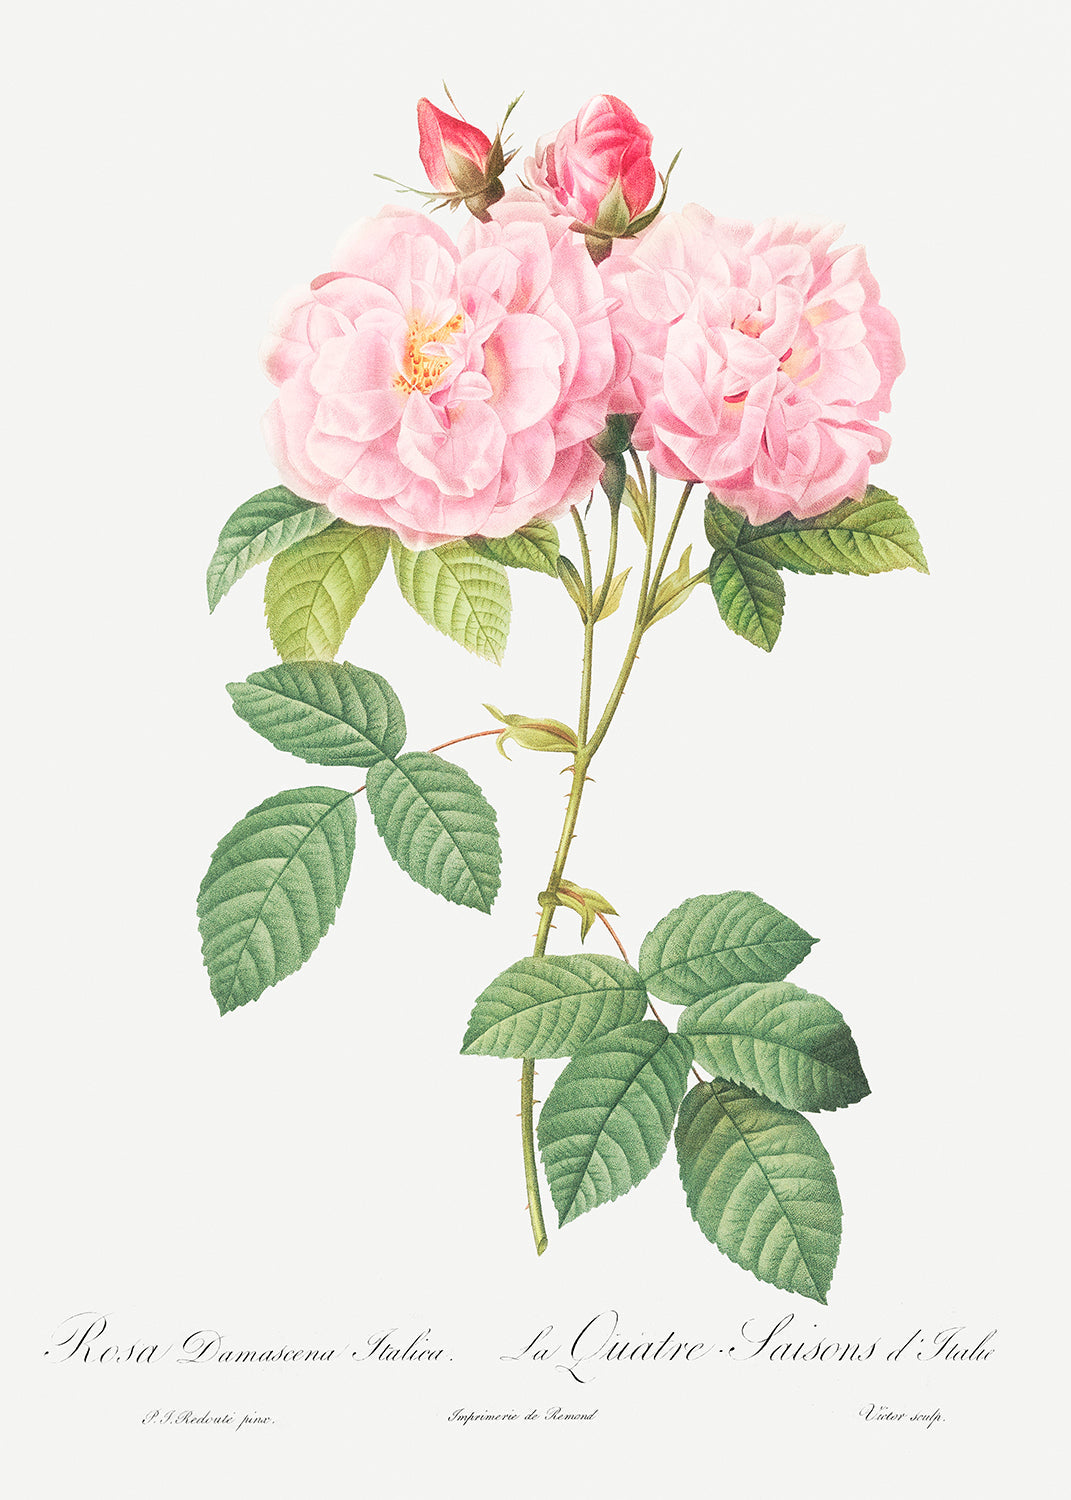 Botanical Plant Print - Italian Damask Rose - Four Seasons of Italy (Rosa damascena Italica) by Pierre Joseph Redoute